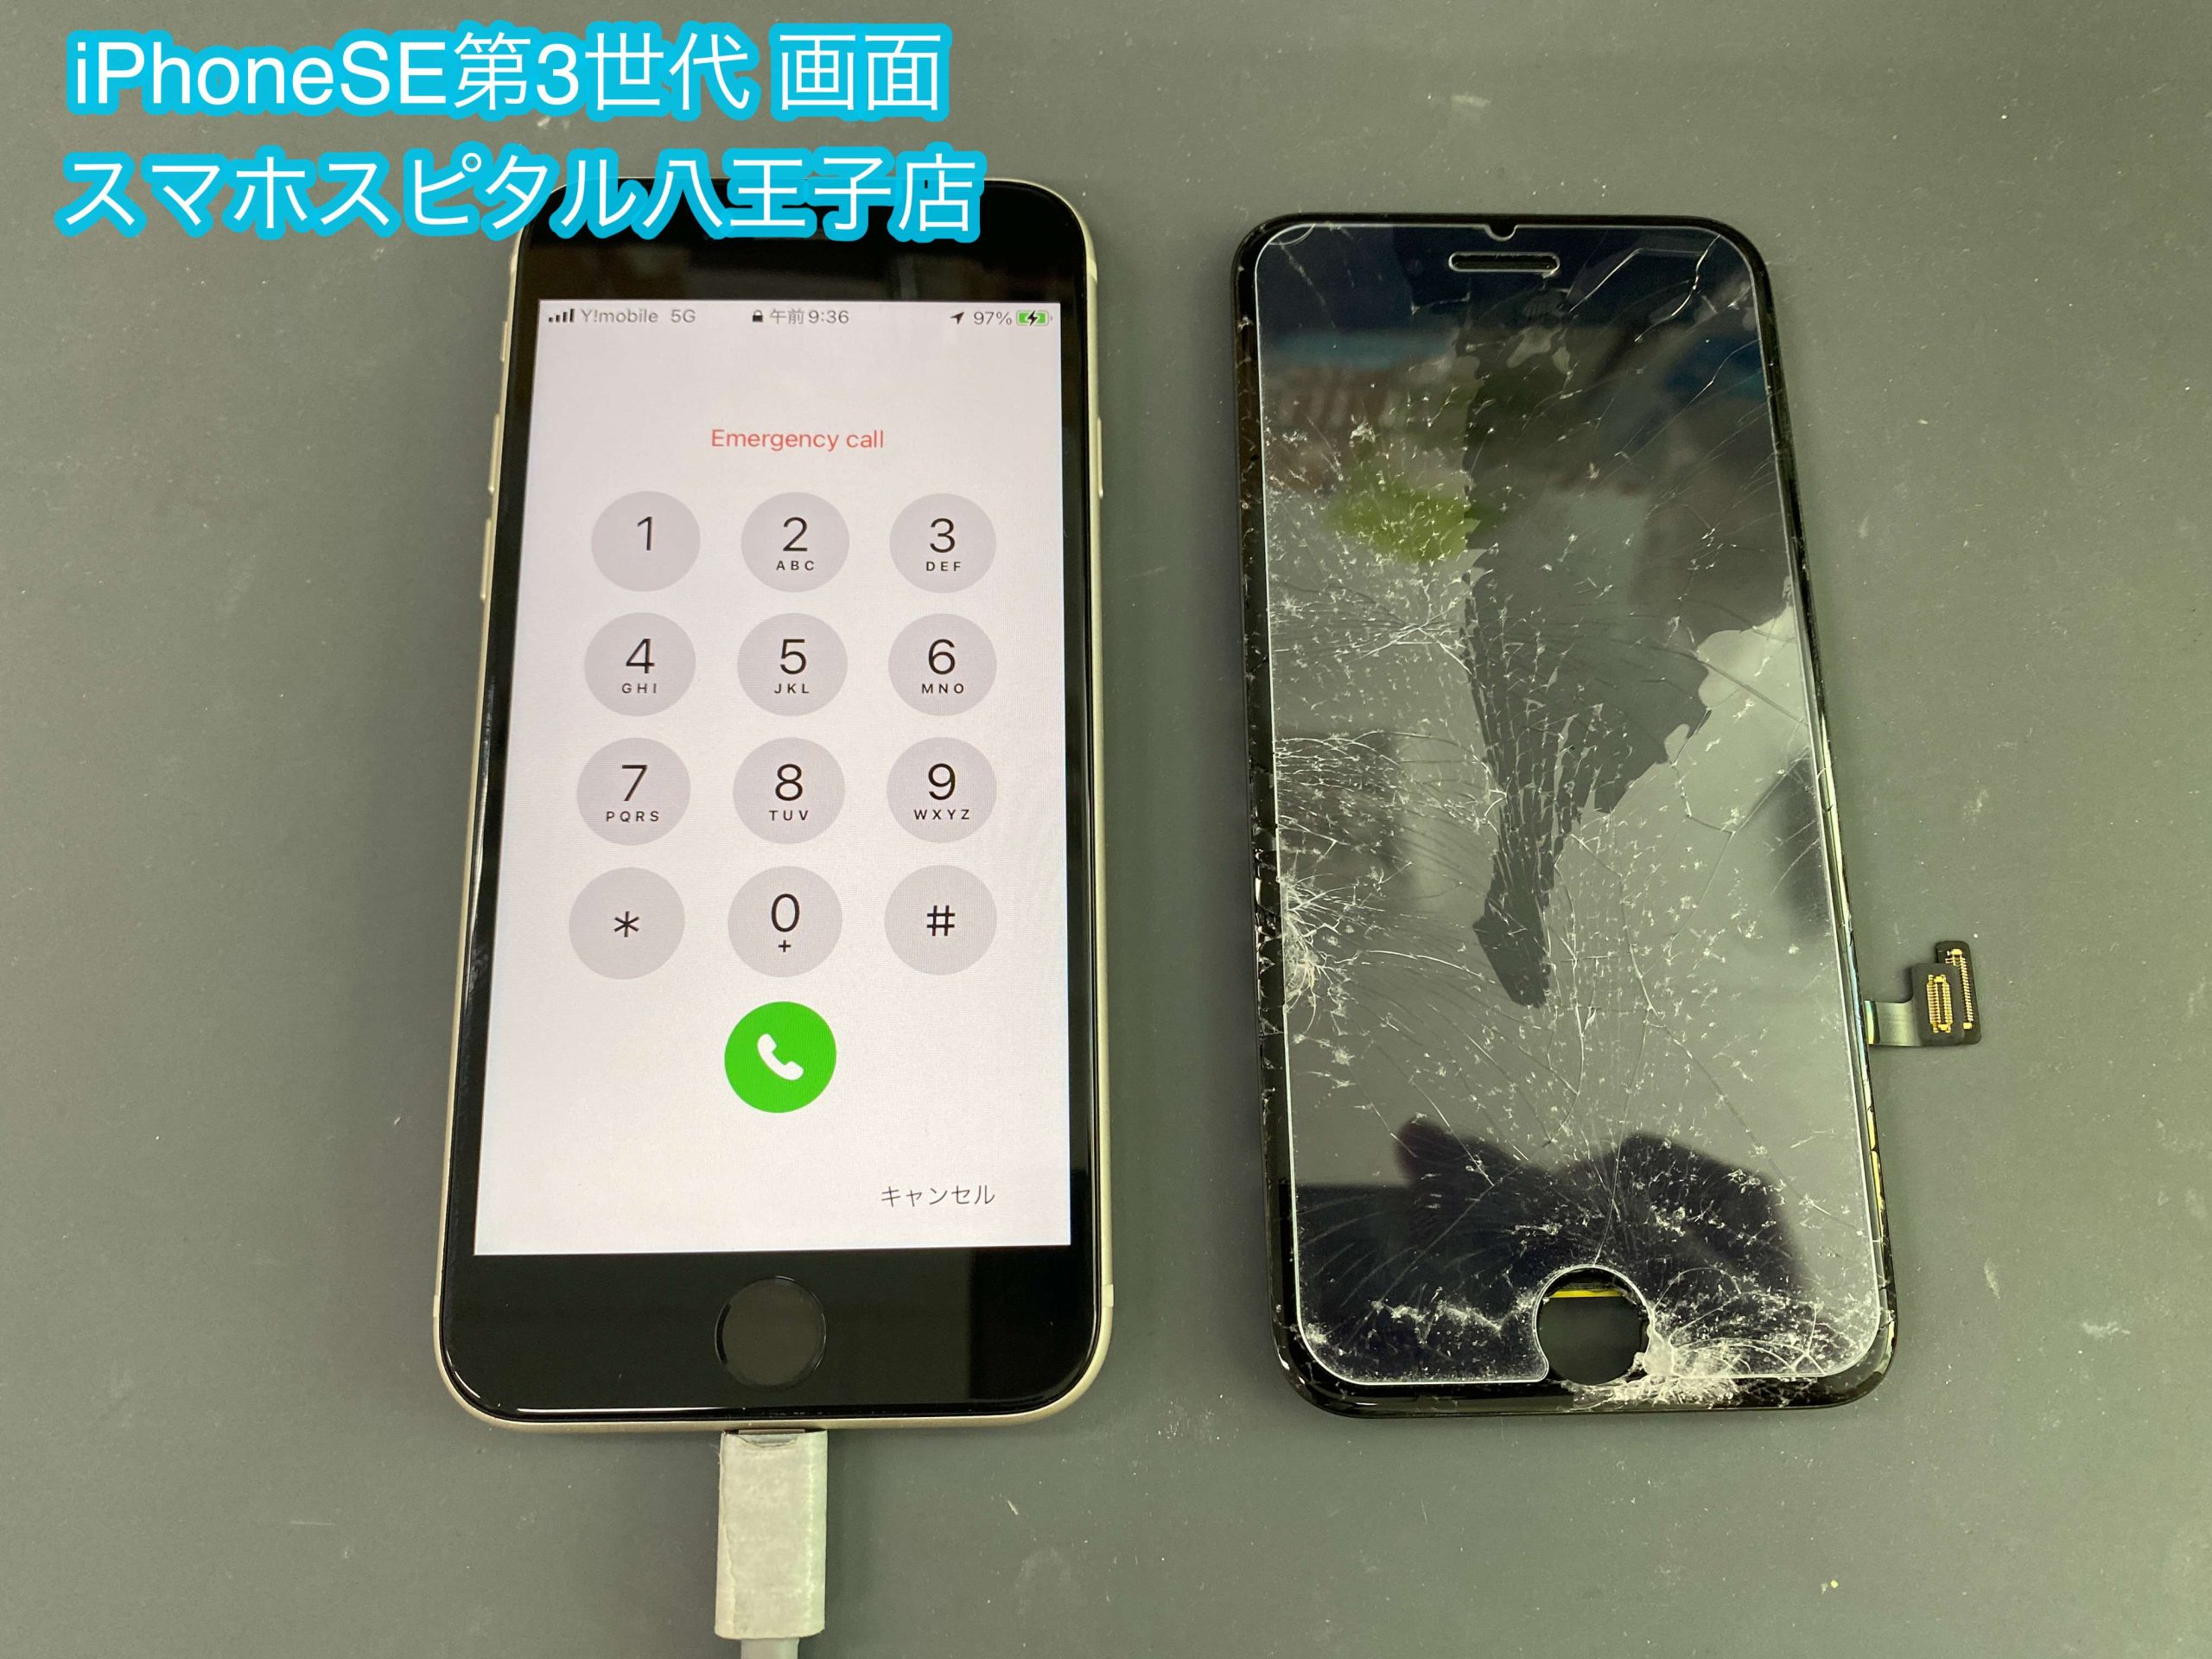 iPhoneSE第3世代の画面ガラスがバキバキに割れた！ ホームボタン付近のガラス破損には要注意⚠ | スマホスピタル八王子店の修理速報